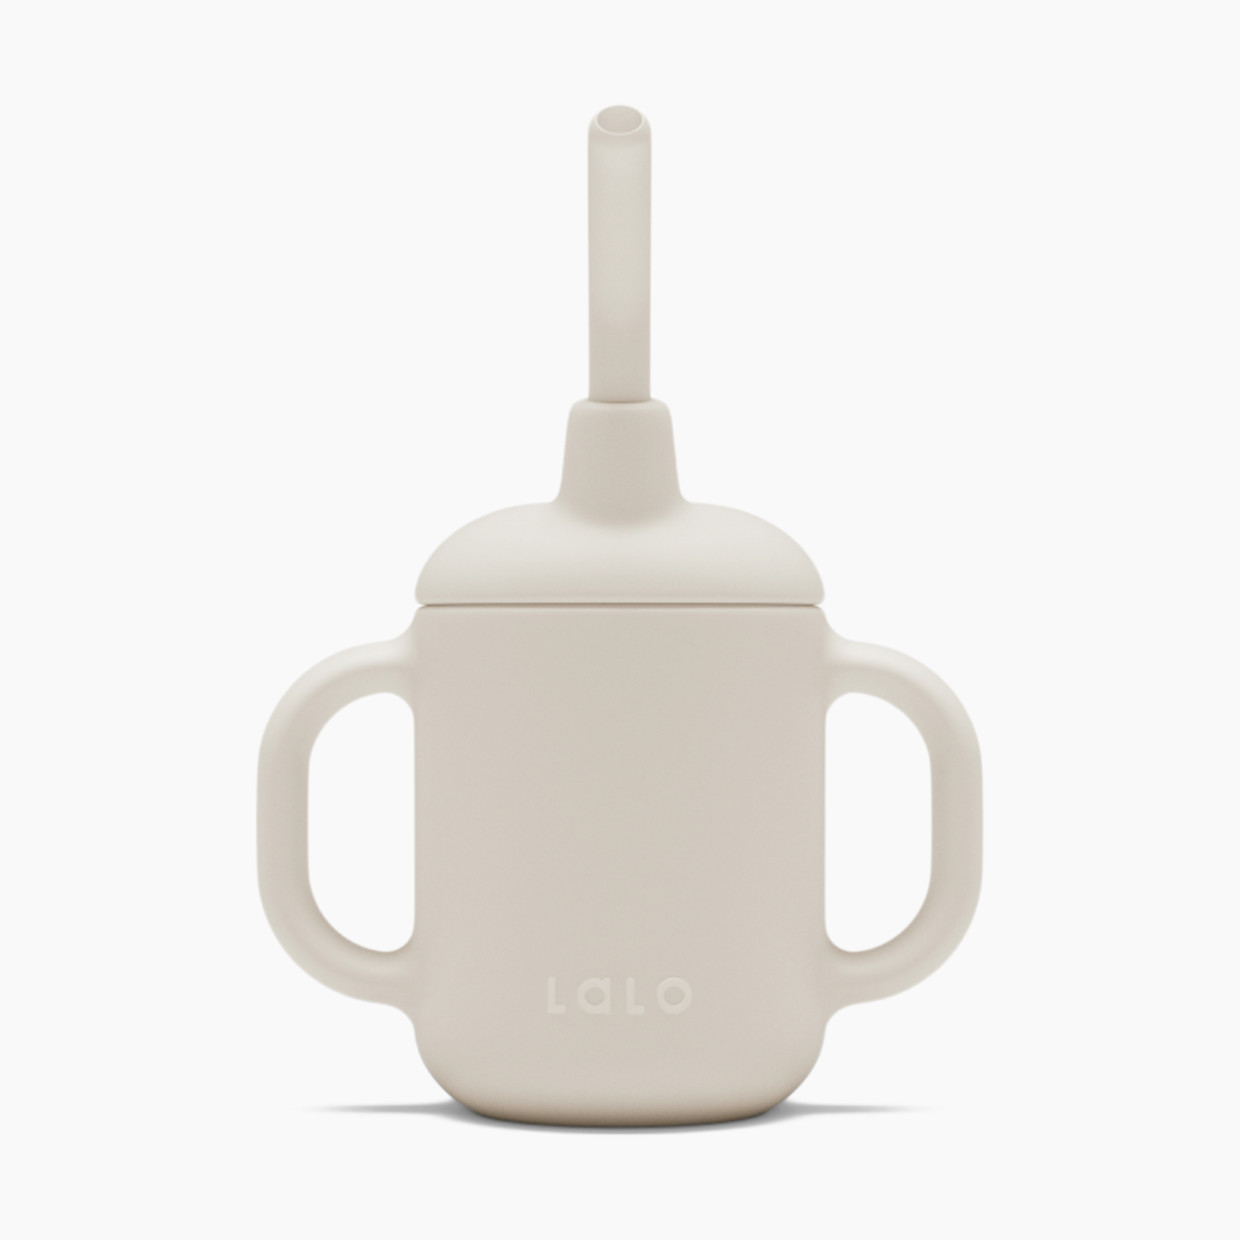 Lalo Little Cup - Oatmeal, 1.